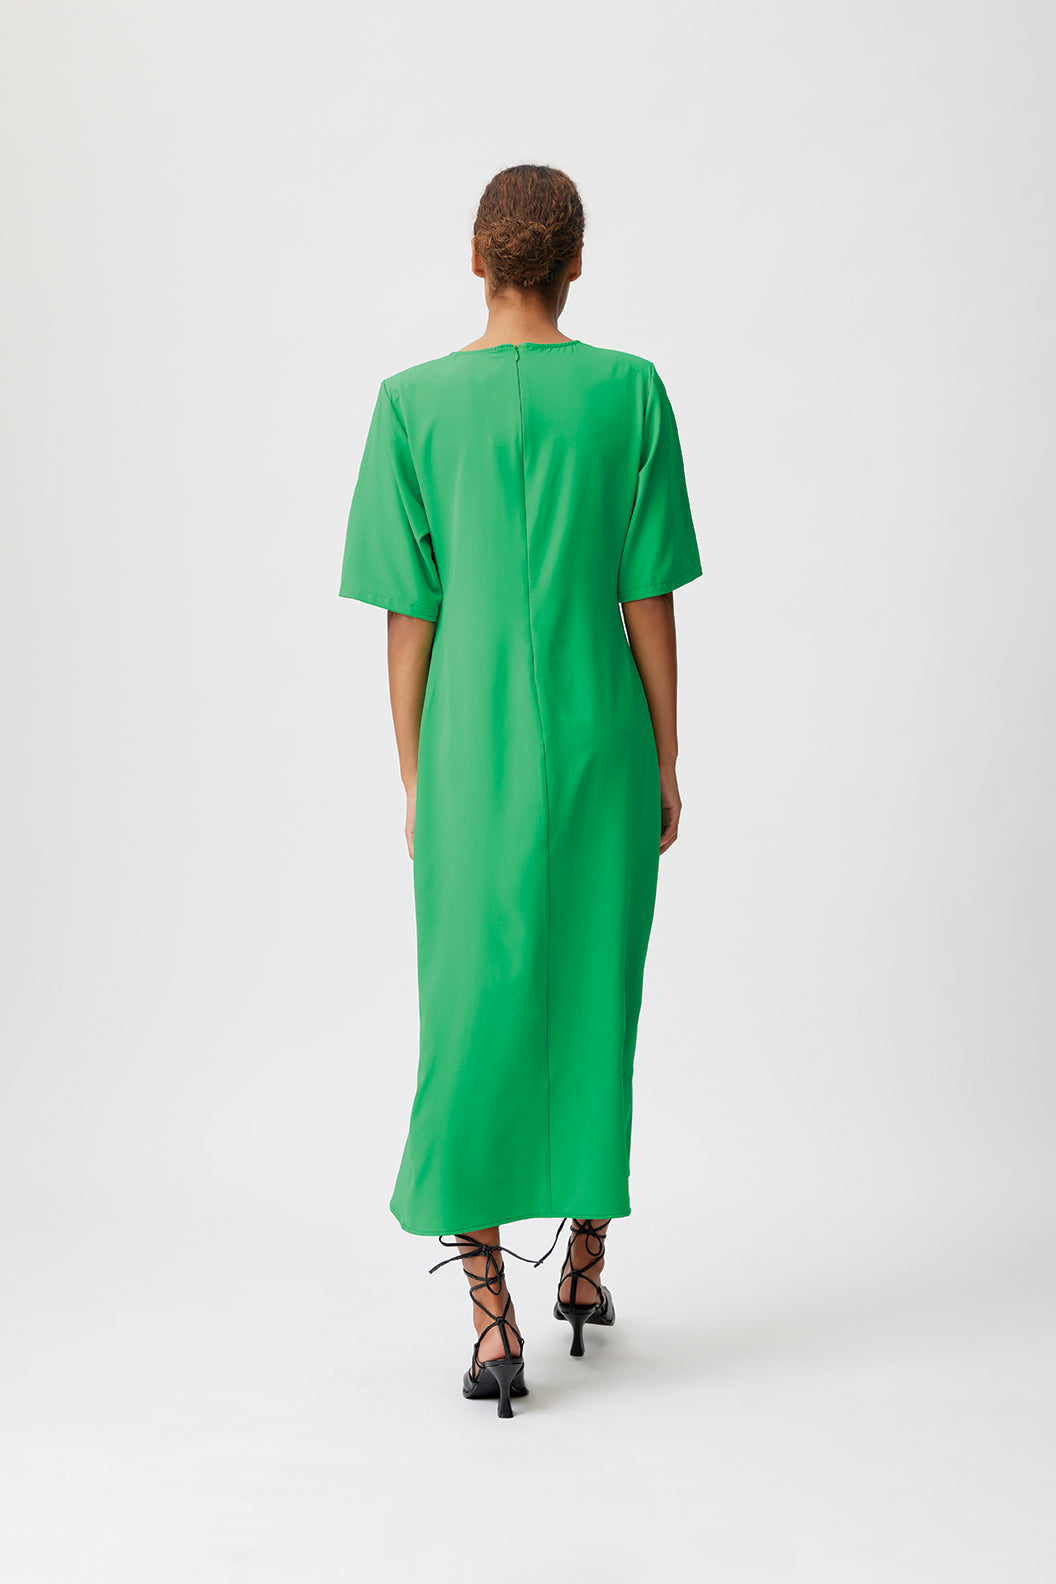 MelbaGZ Long Dress - Green Bee